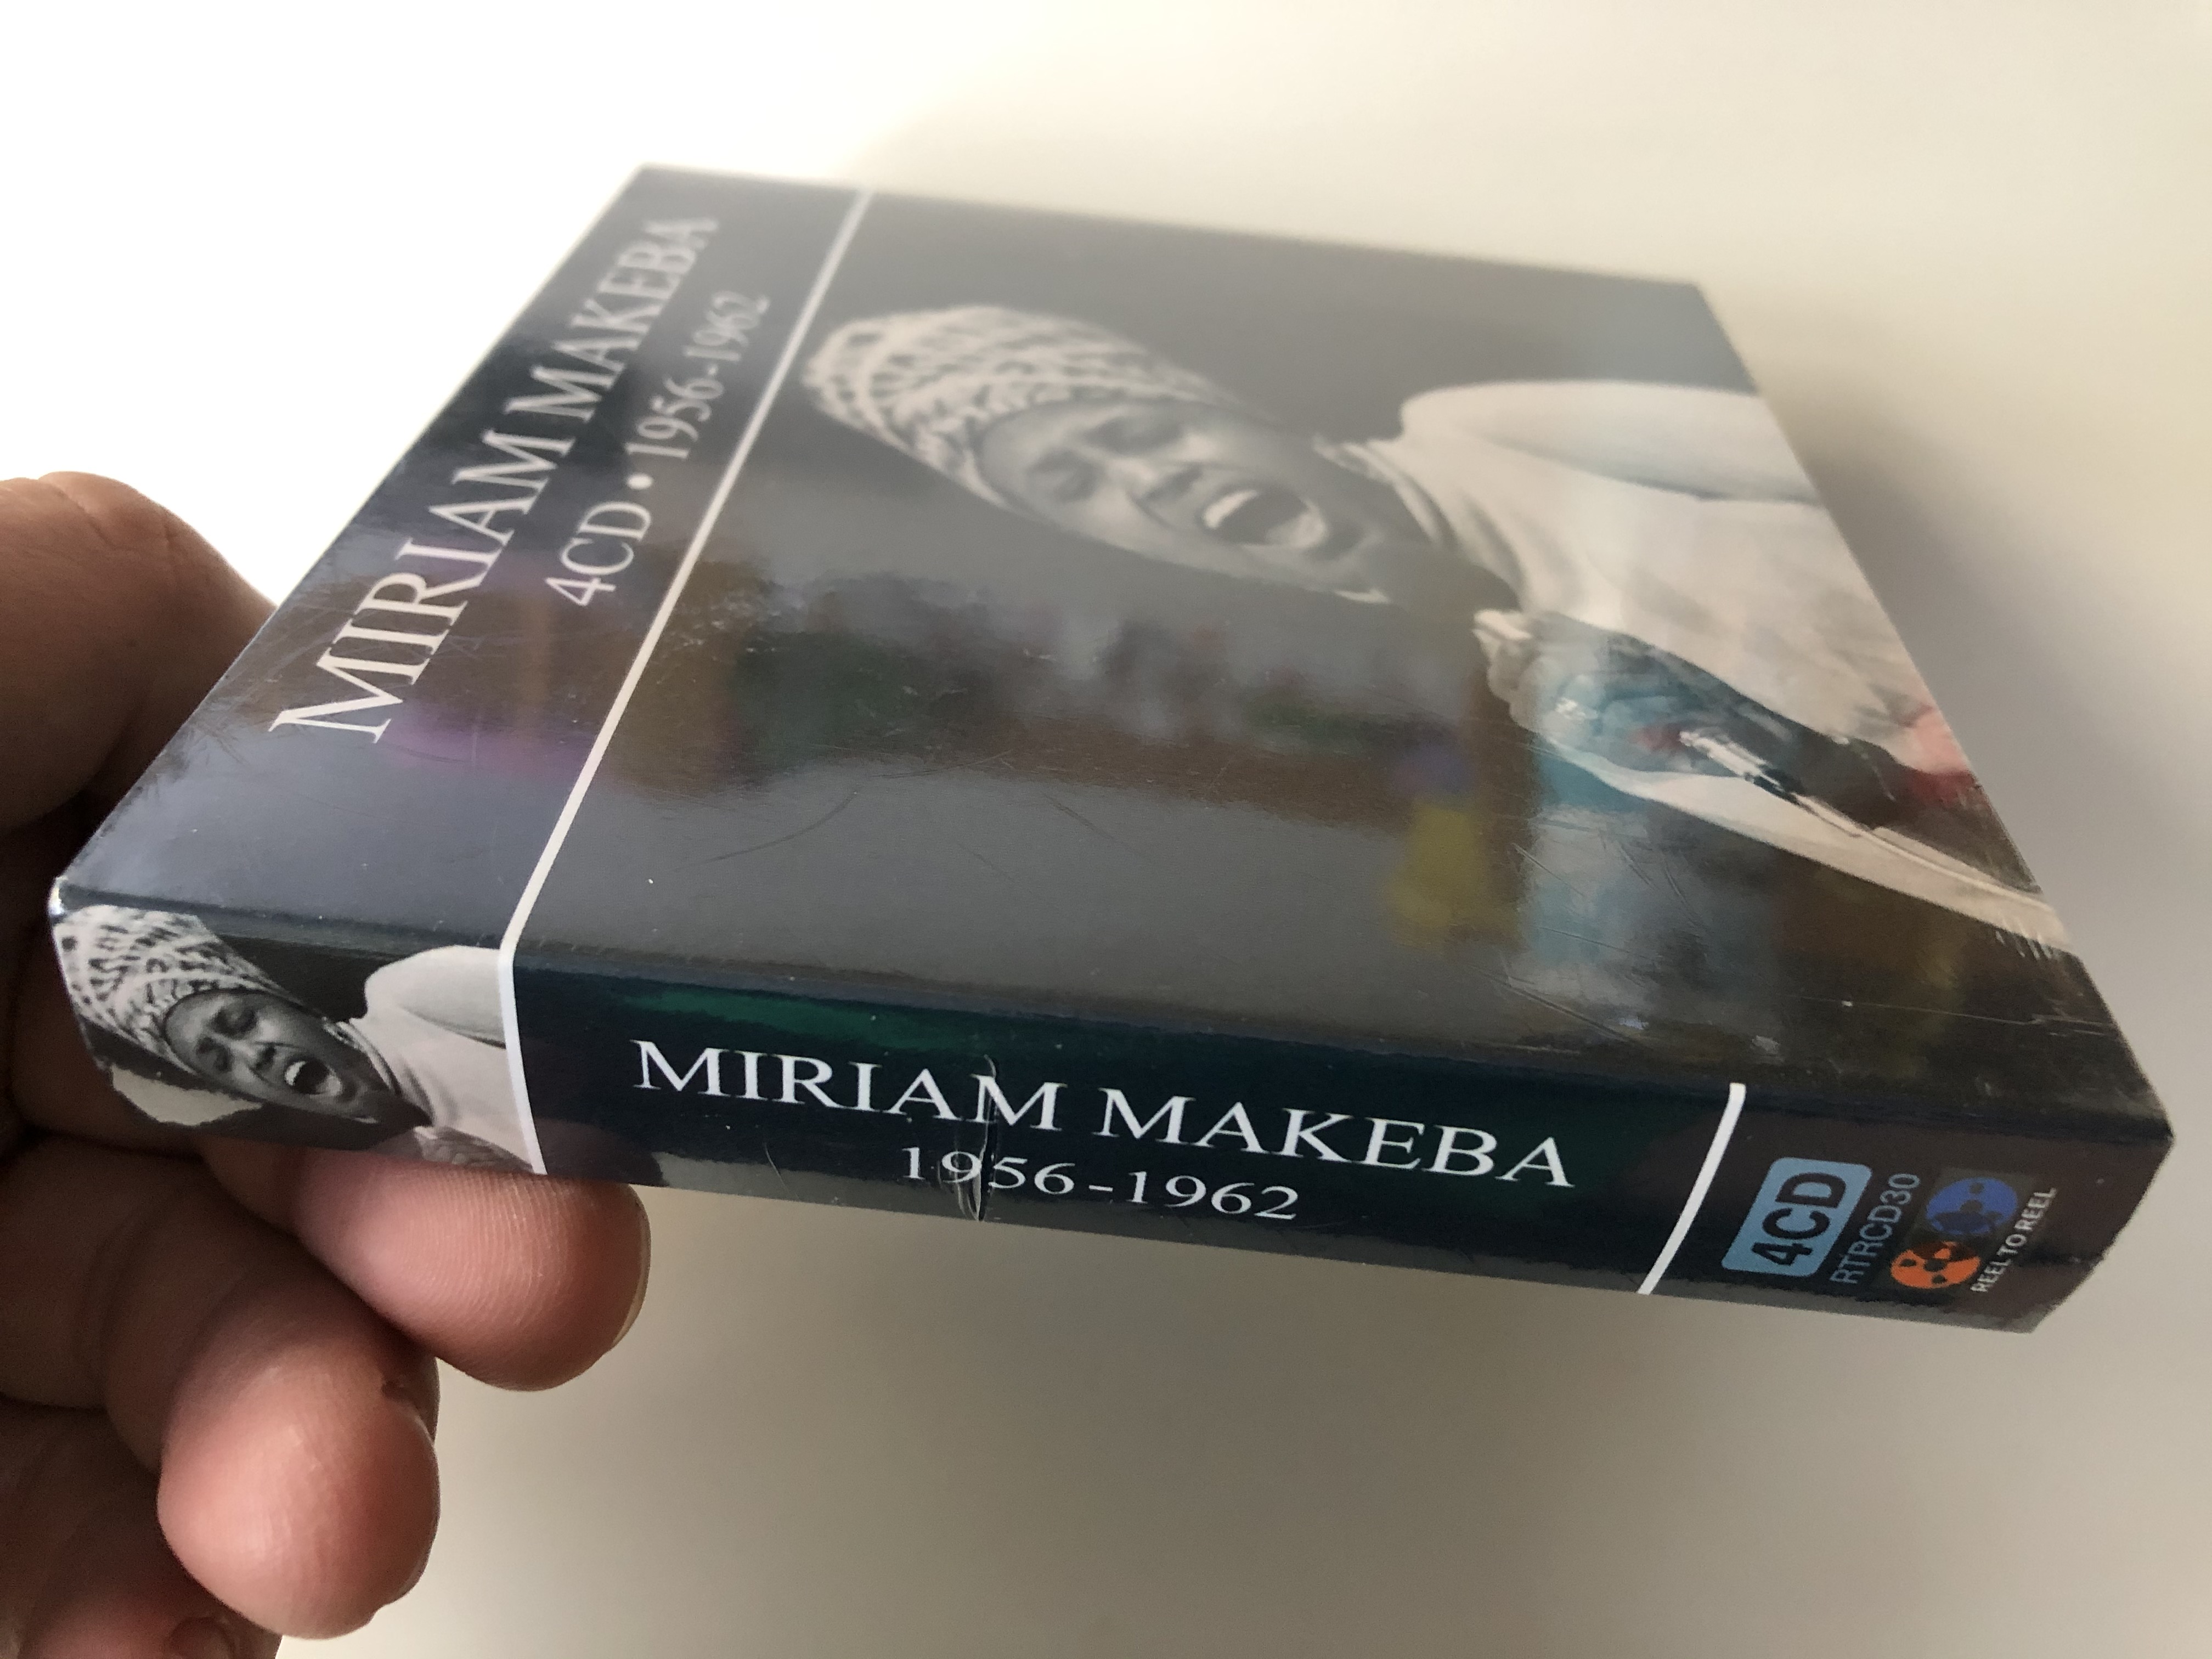 miriam-makeba-1956-1962-reel-to-reel-music-company-4x-audio-cd-rtrcd30-2-.jpg